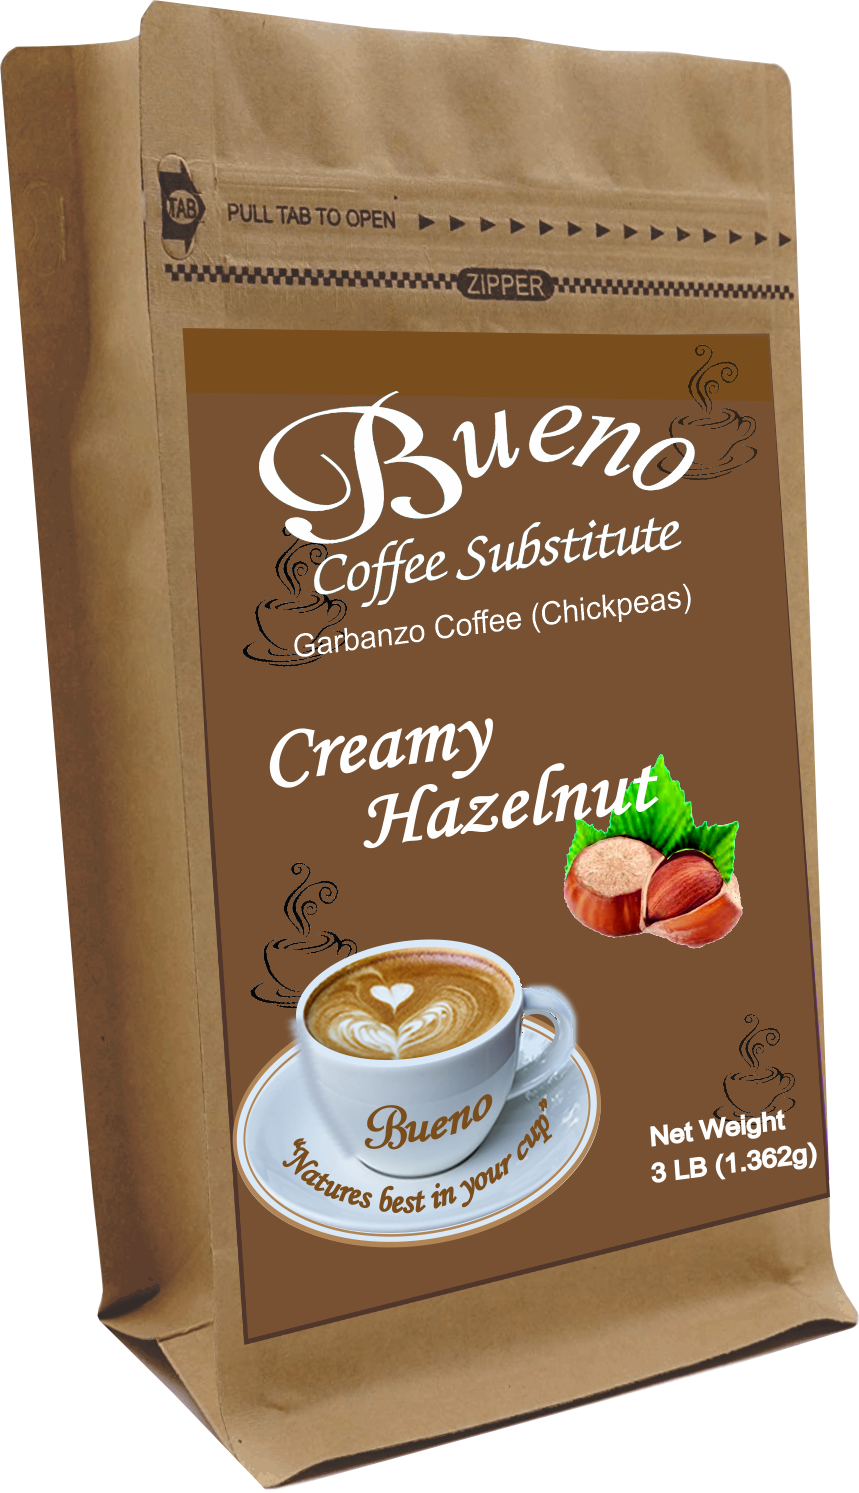 Original 6-7 ounce packages Bueno Coffee Substitute, Original